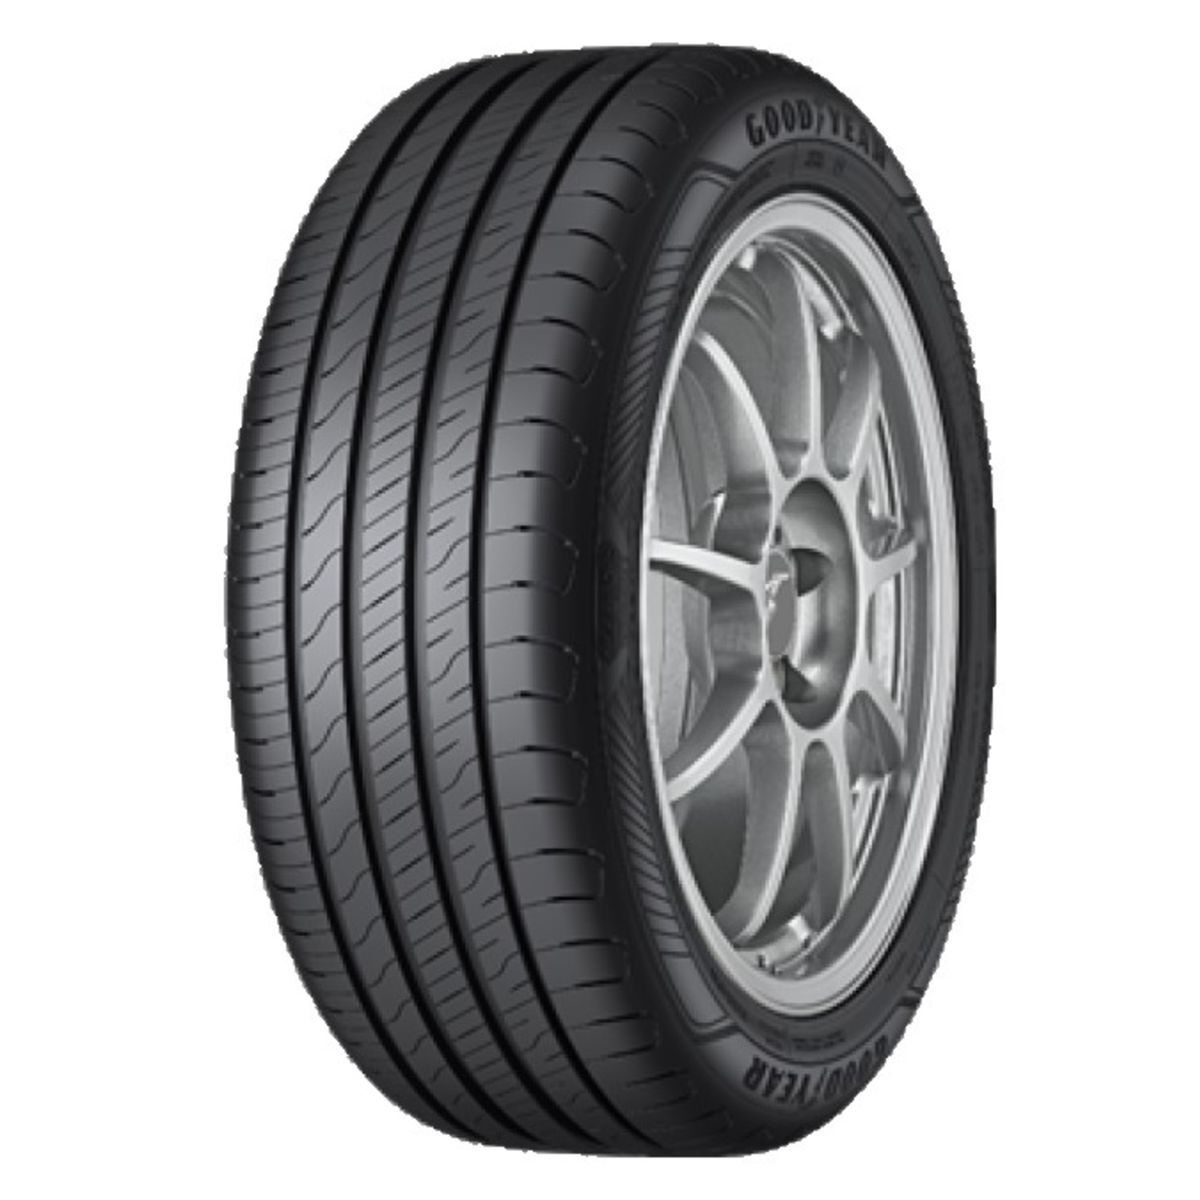 Neumáticos de verano GOODYEAR Efficientgrip Performance 2 225/50R17 XL 98W